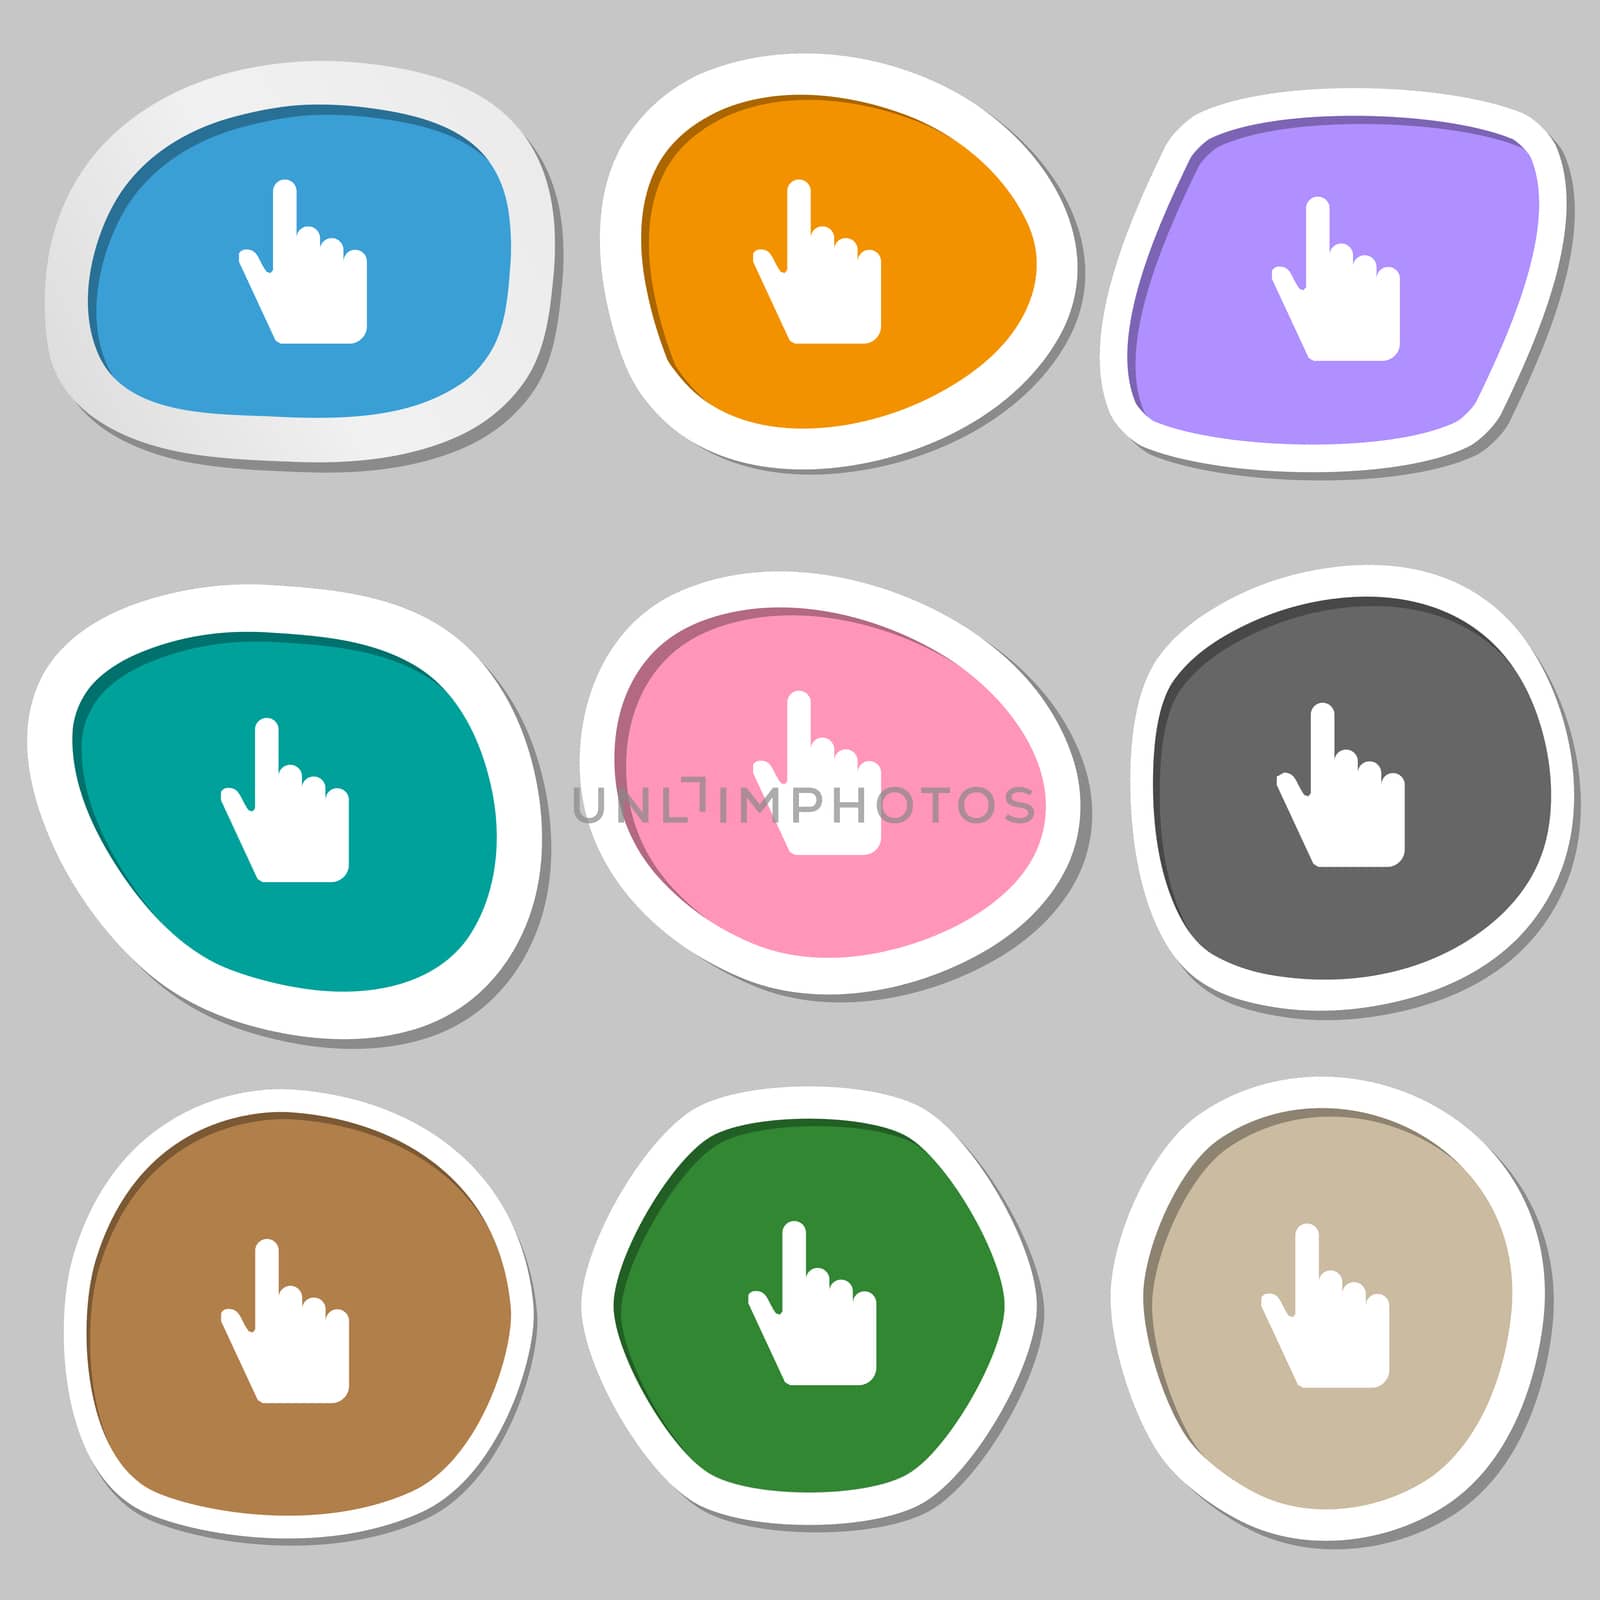 cursor icon symbols. Multicolored paper stickers.  by serhii_lohvyniuk